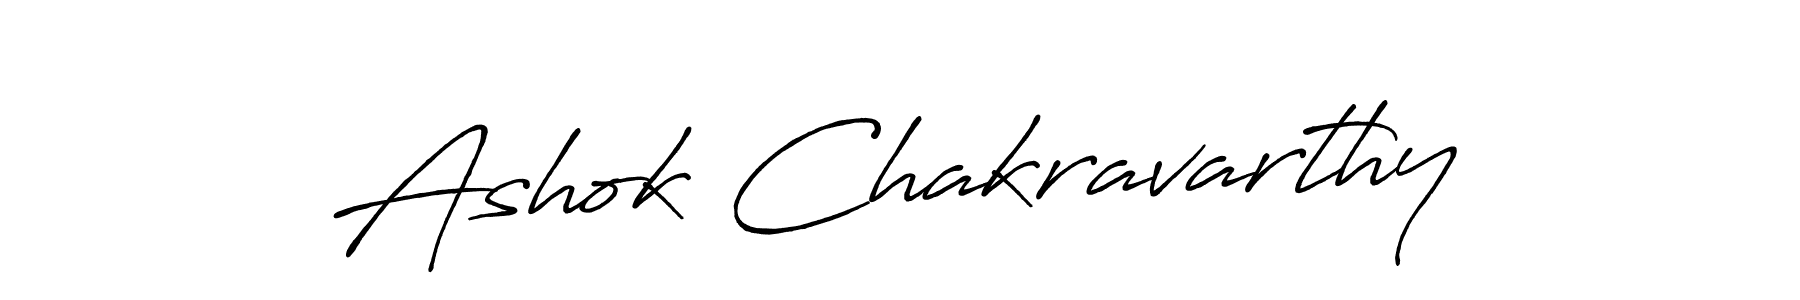 How to Draw Ashok Chakravarthy signature style? Antro_Vectra_Bolder is a latest design signature styles for name Ashok Chakravarthy. Ashok Chakravarthy signature style 7 images and pictures png